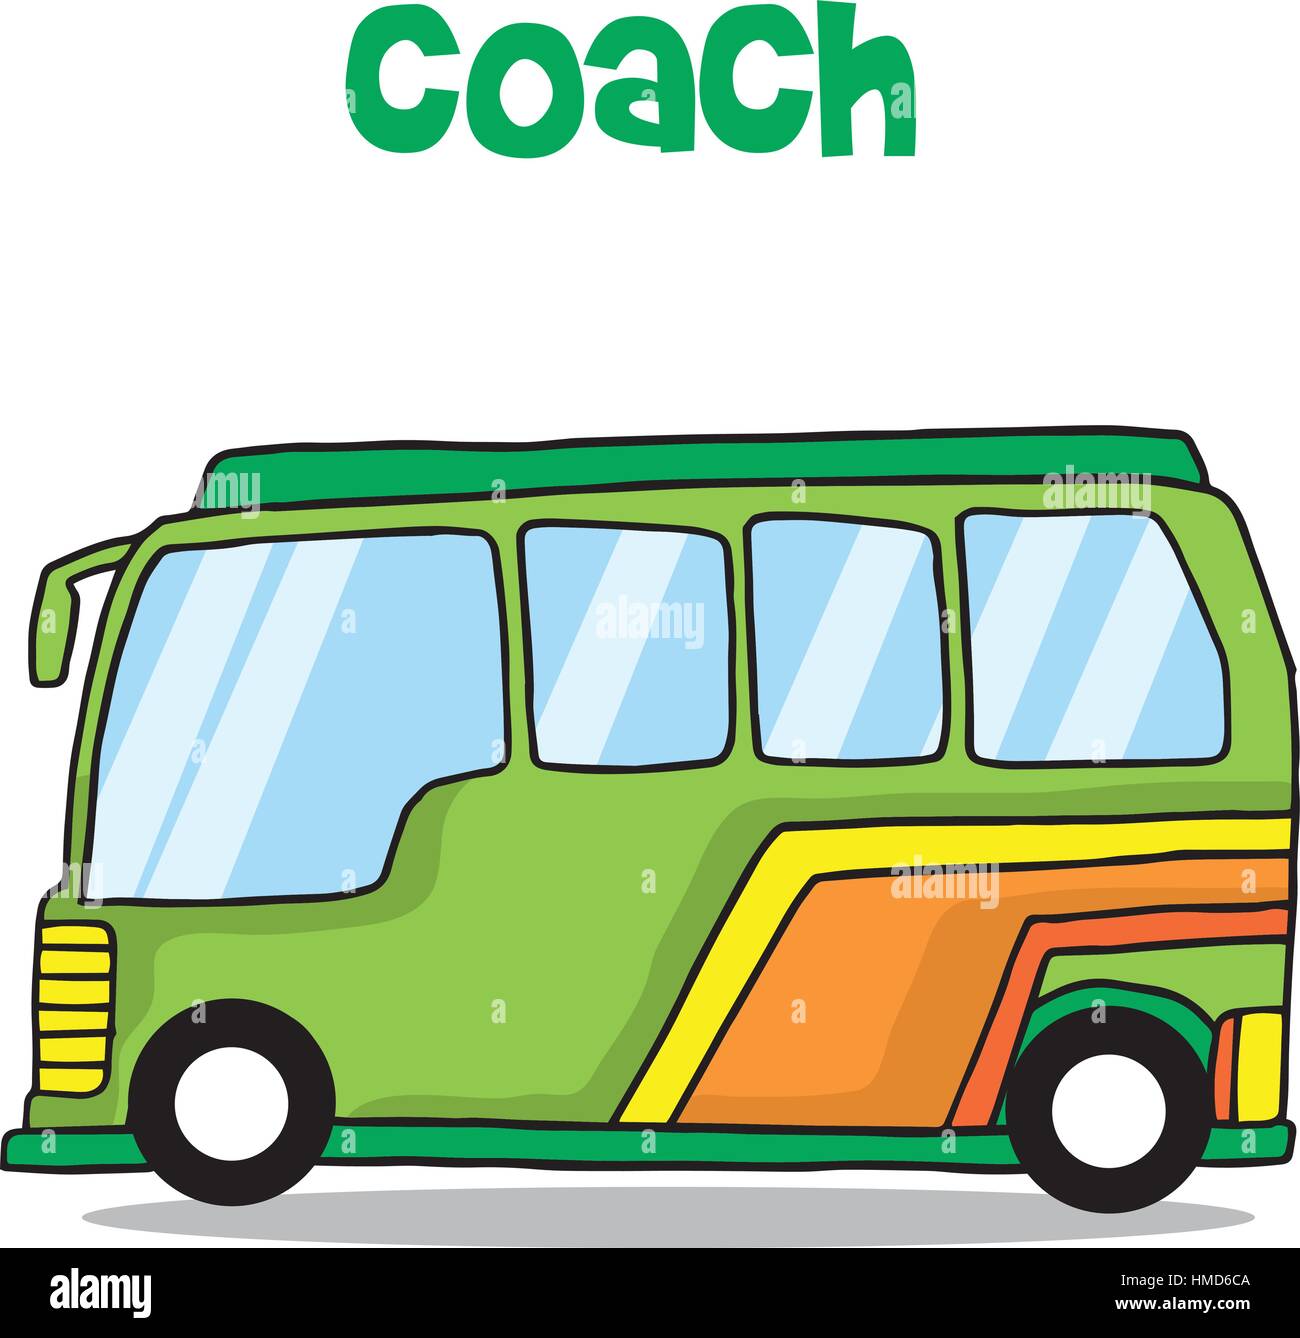 Cartoon of coach bus transportation Stock Vector Image & Art - Alamy